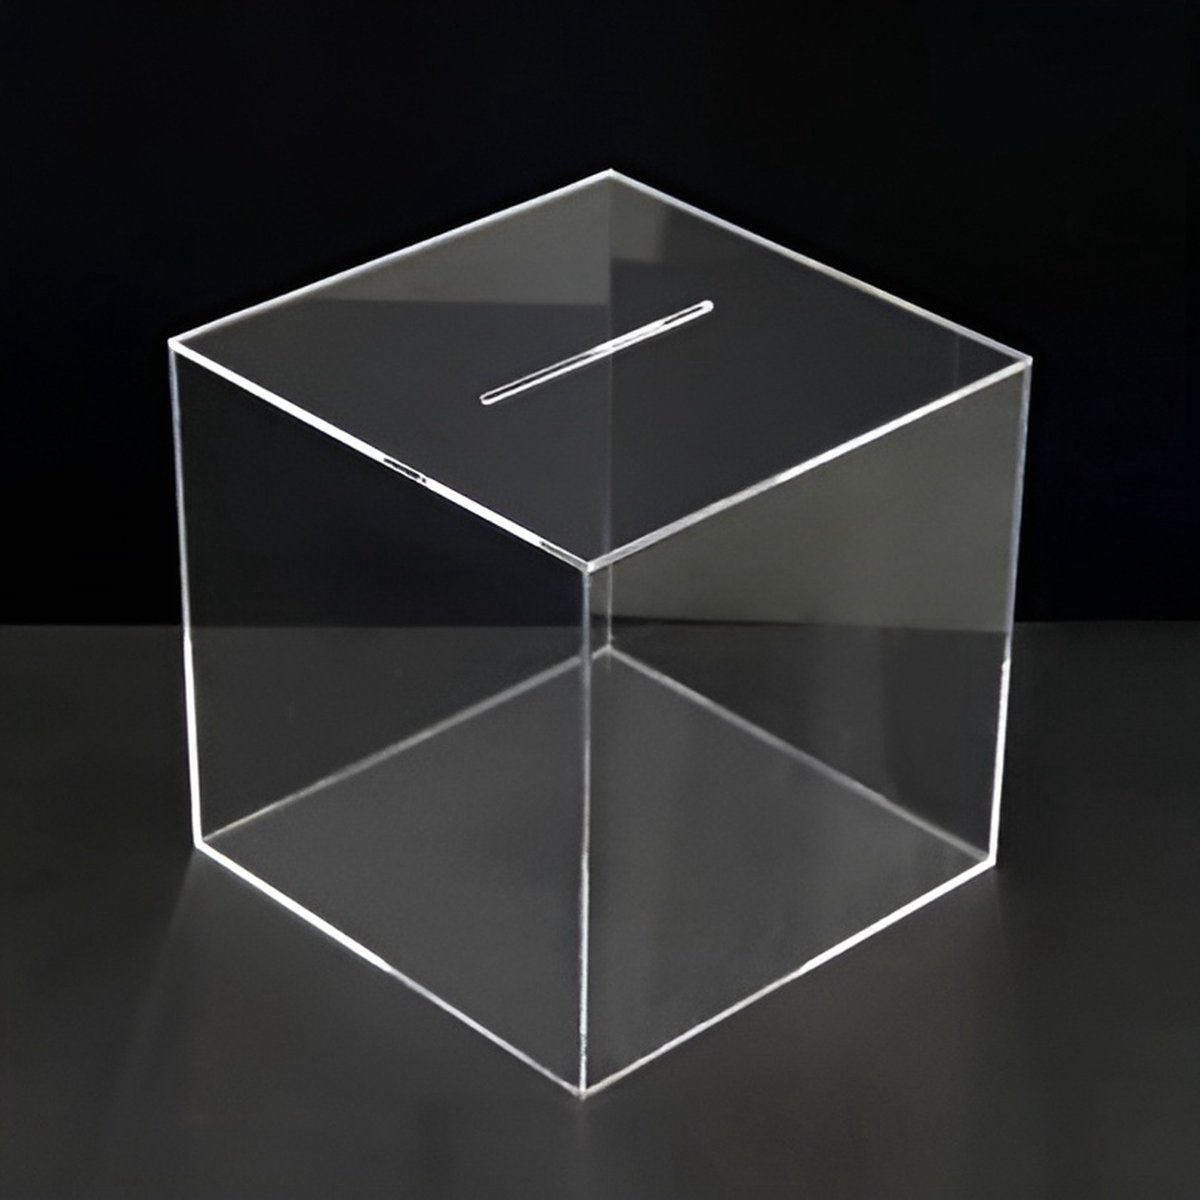 Plexiglas kubus / brievenbus | 30x30x30cm | Met dichte deksel én deksel met gleuf